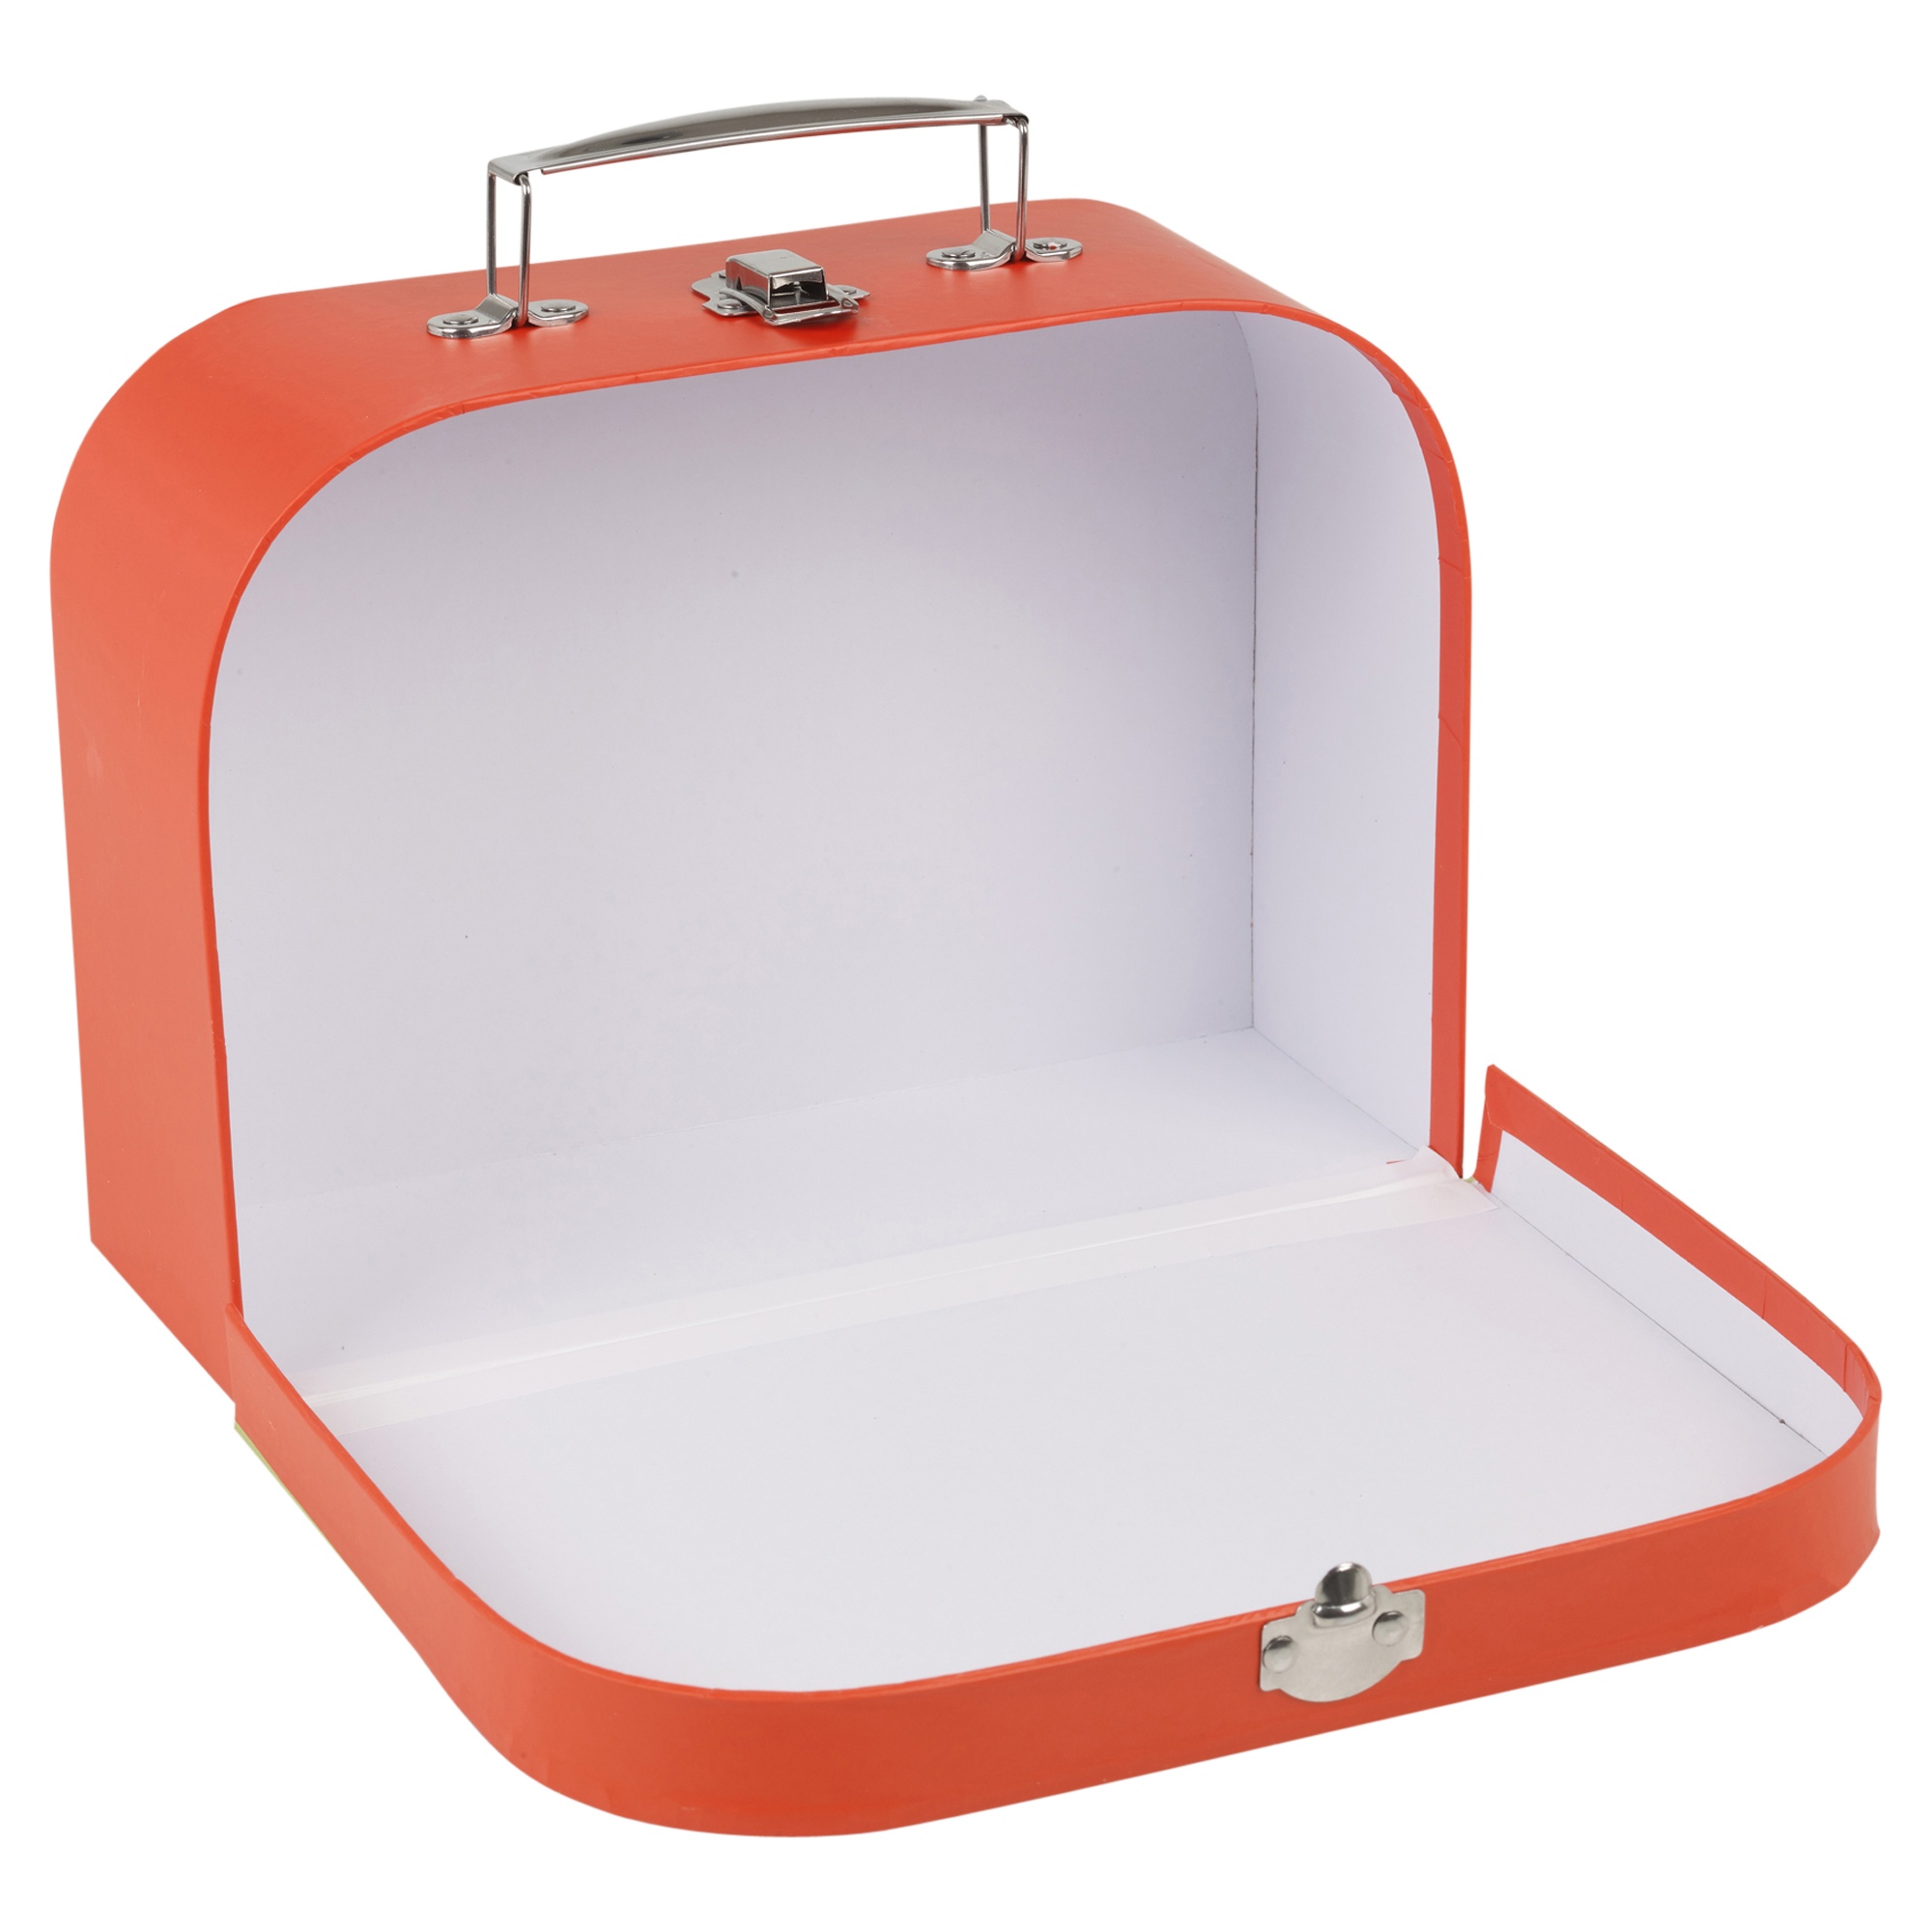 Download 3pcs Kids Storage Suitcase School Craft Carry Case Set Clothes Toys Books Box | eBay